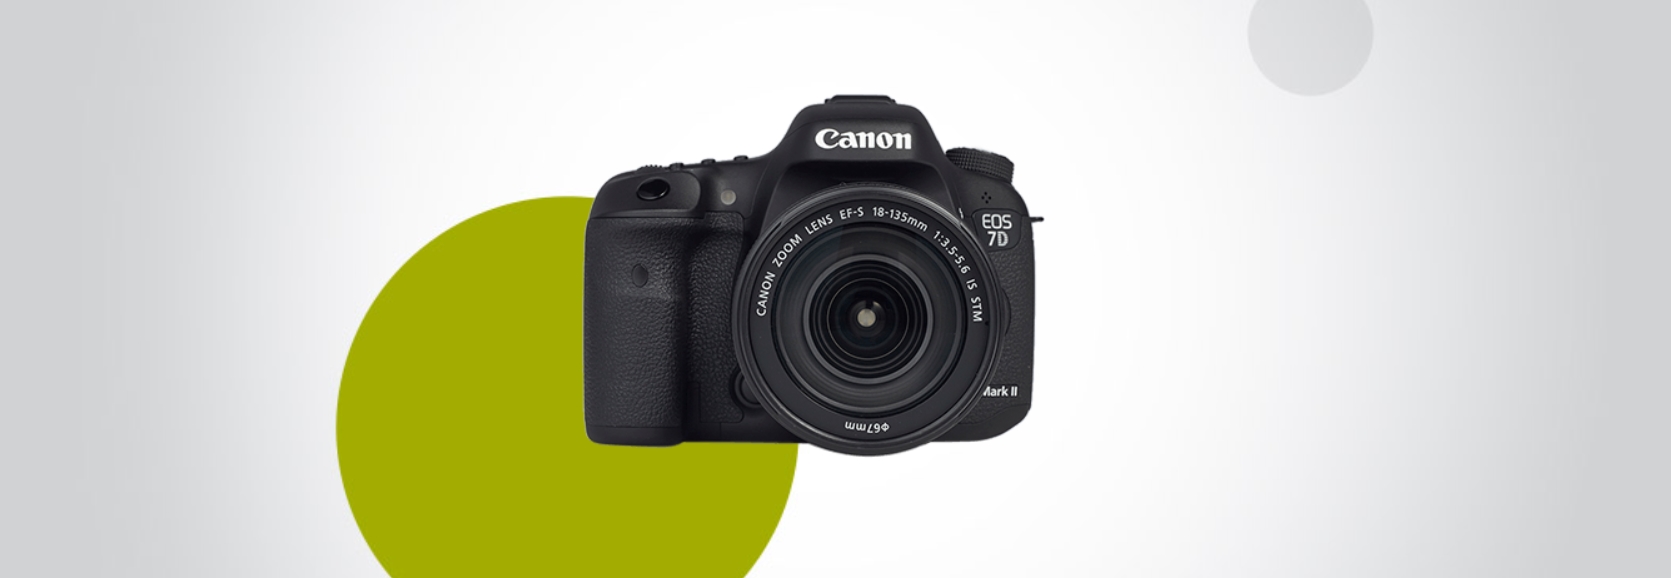 Canon EOS 7D Mark II: La joya de la corona en fotografía 6